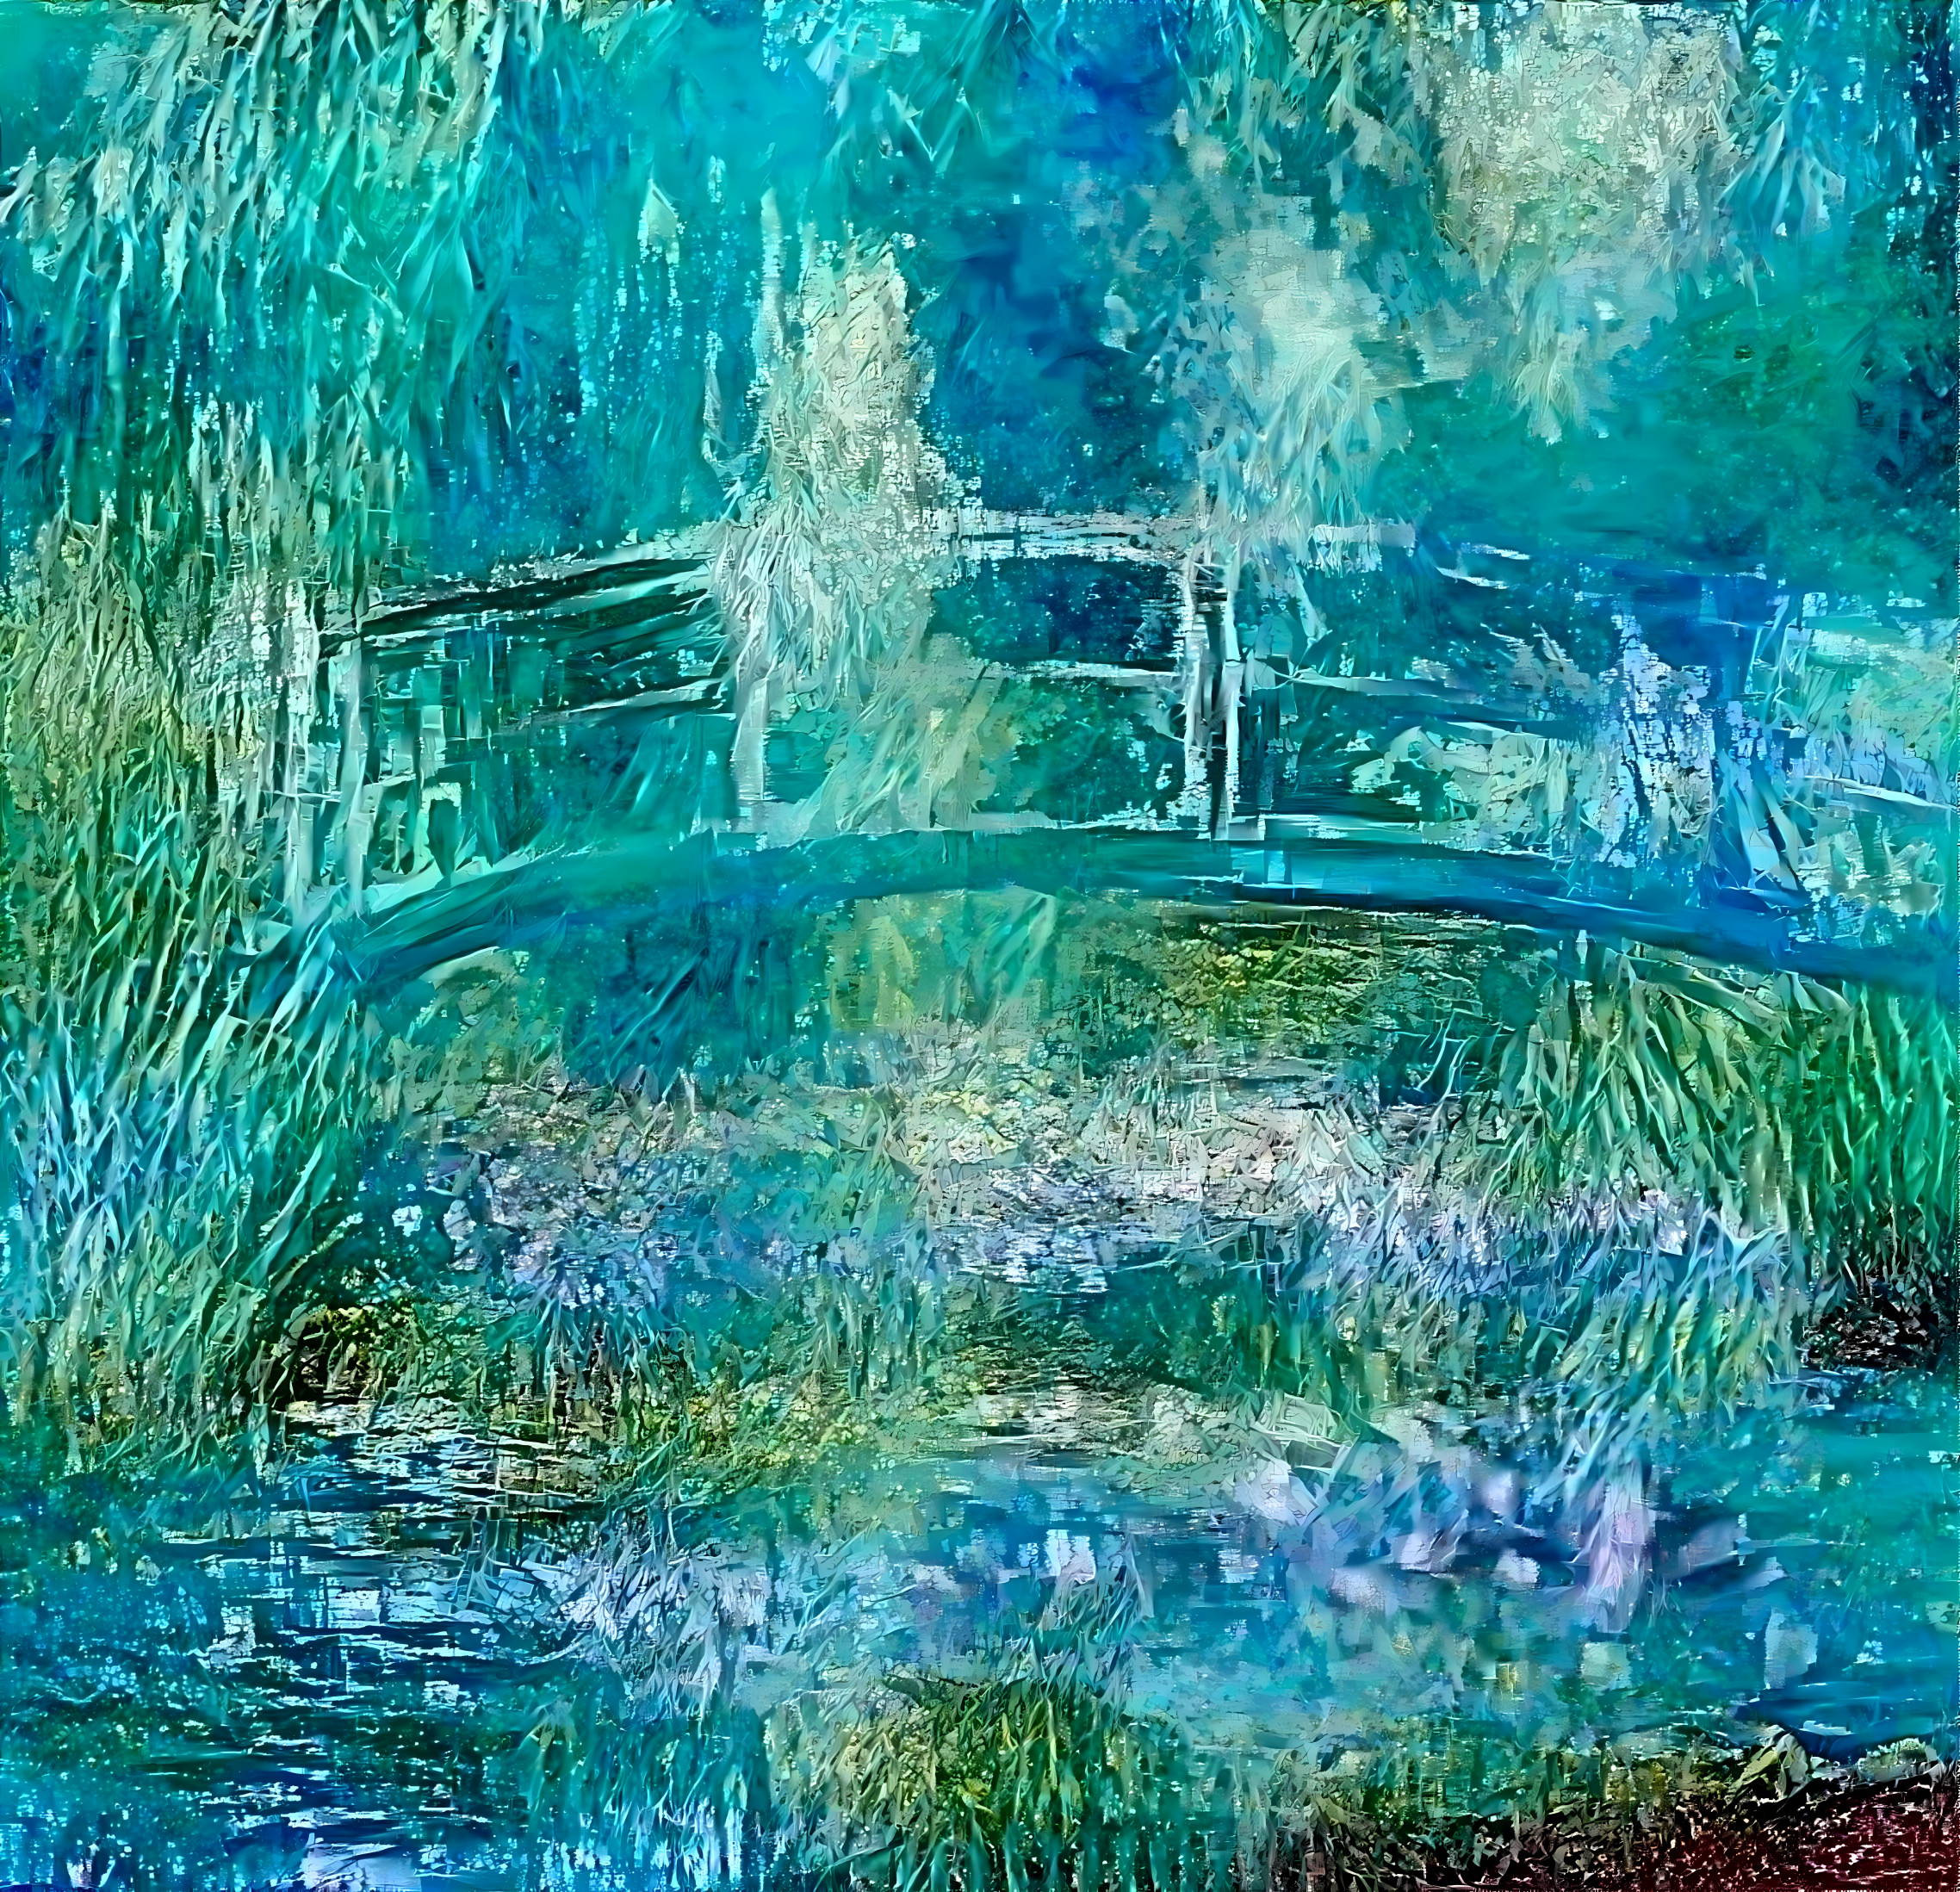 Bridge at Giverny, France, Impressionist style